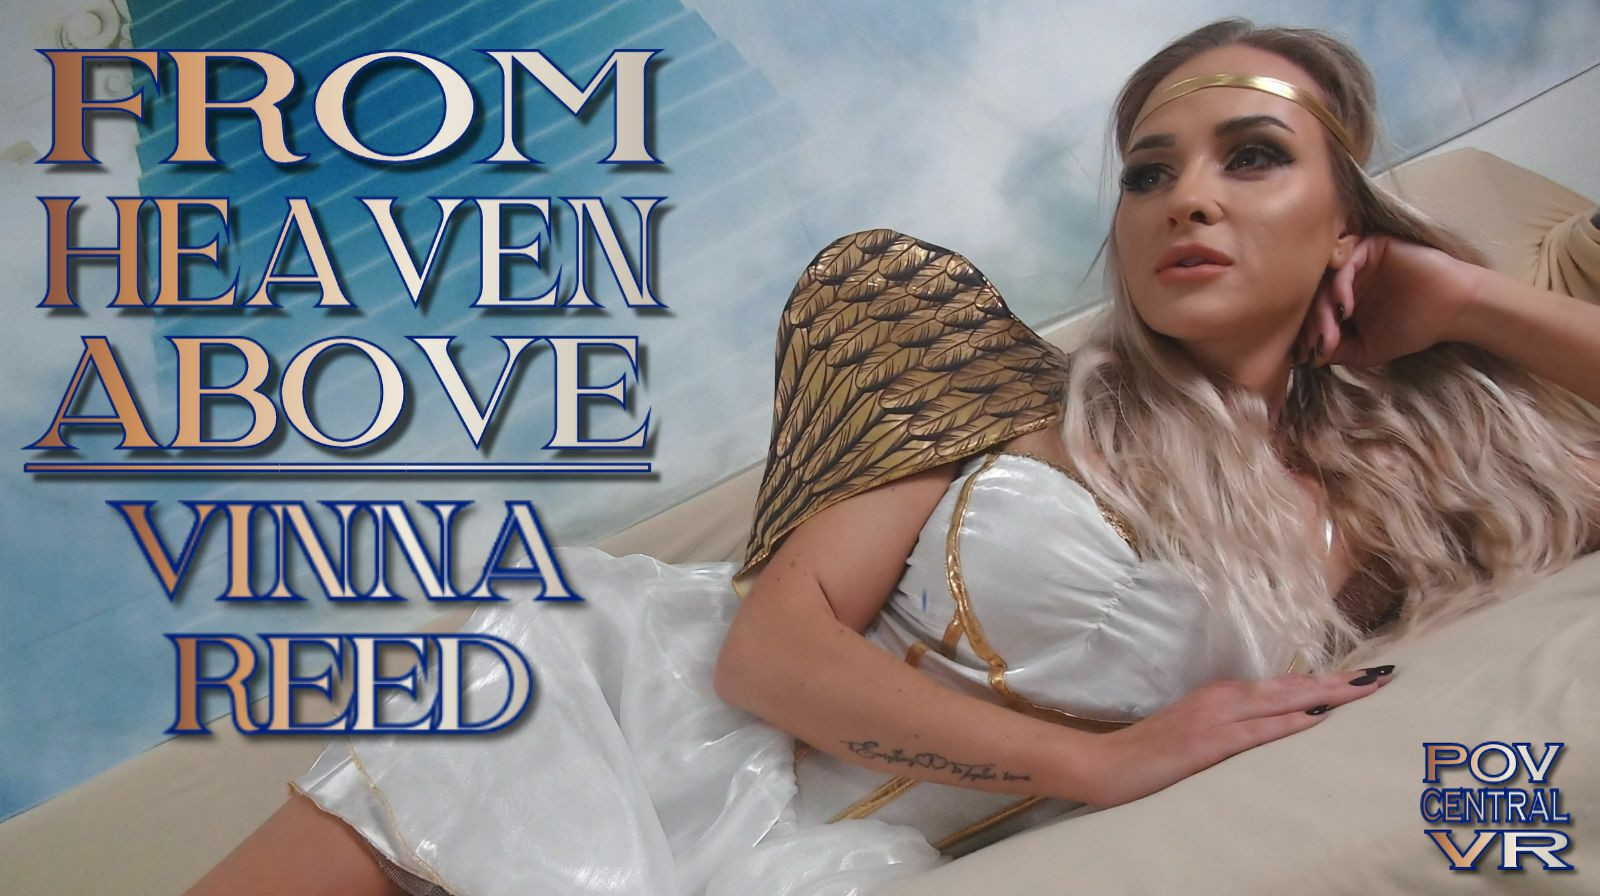 Vinna Reed: From Heaven Above: Vinna Reed Slideshow